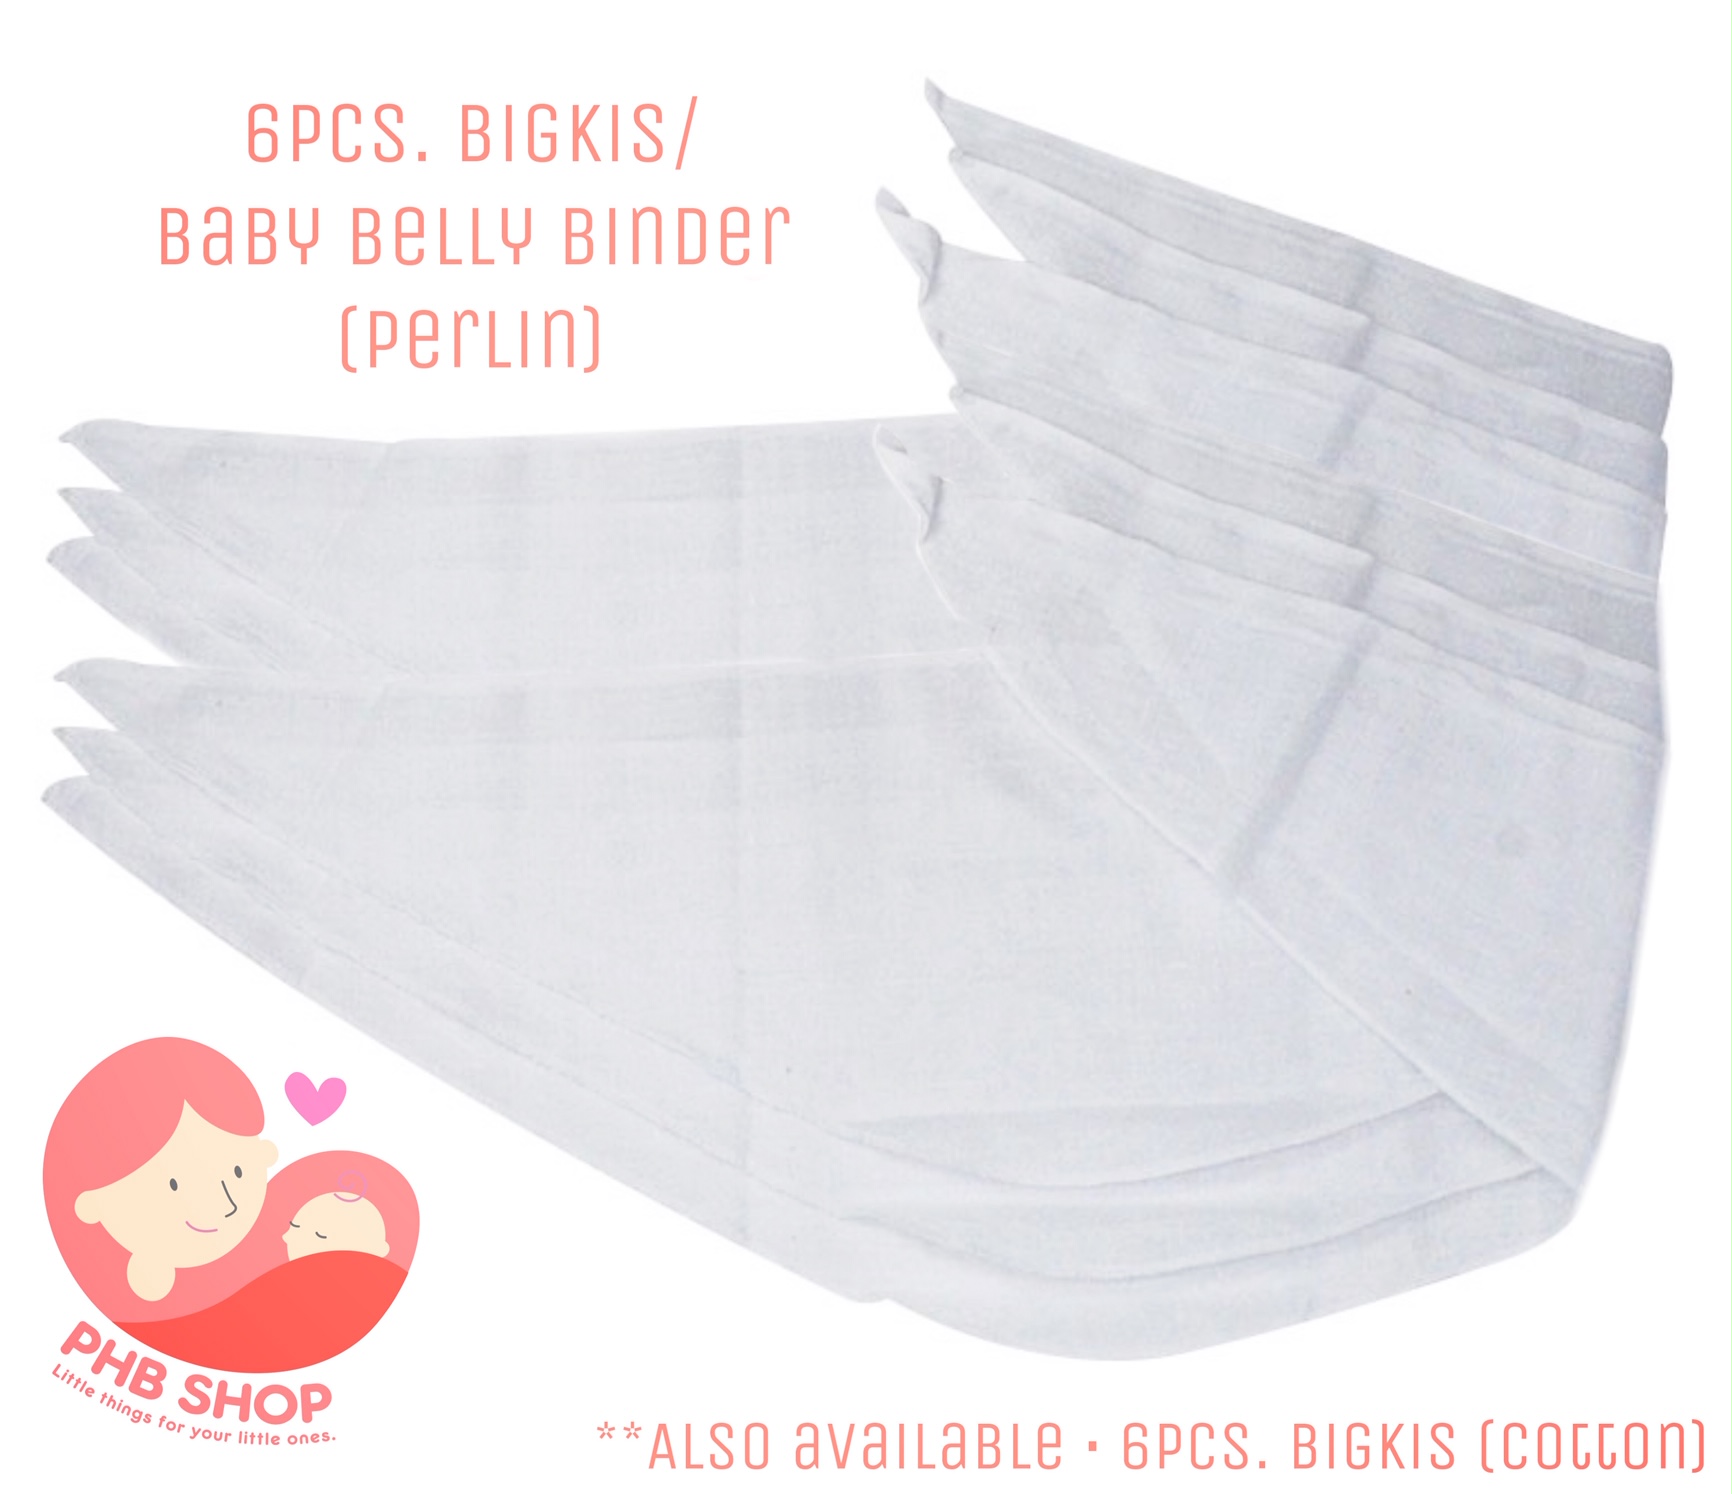 phbshop-newborn-baby-belly-binder-bigkis-cotton-perlin-6pcs